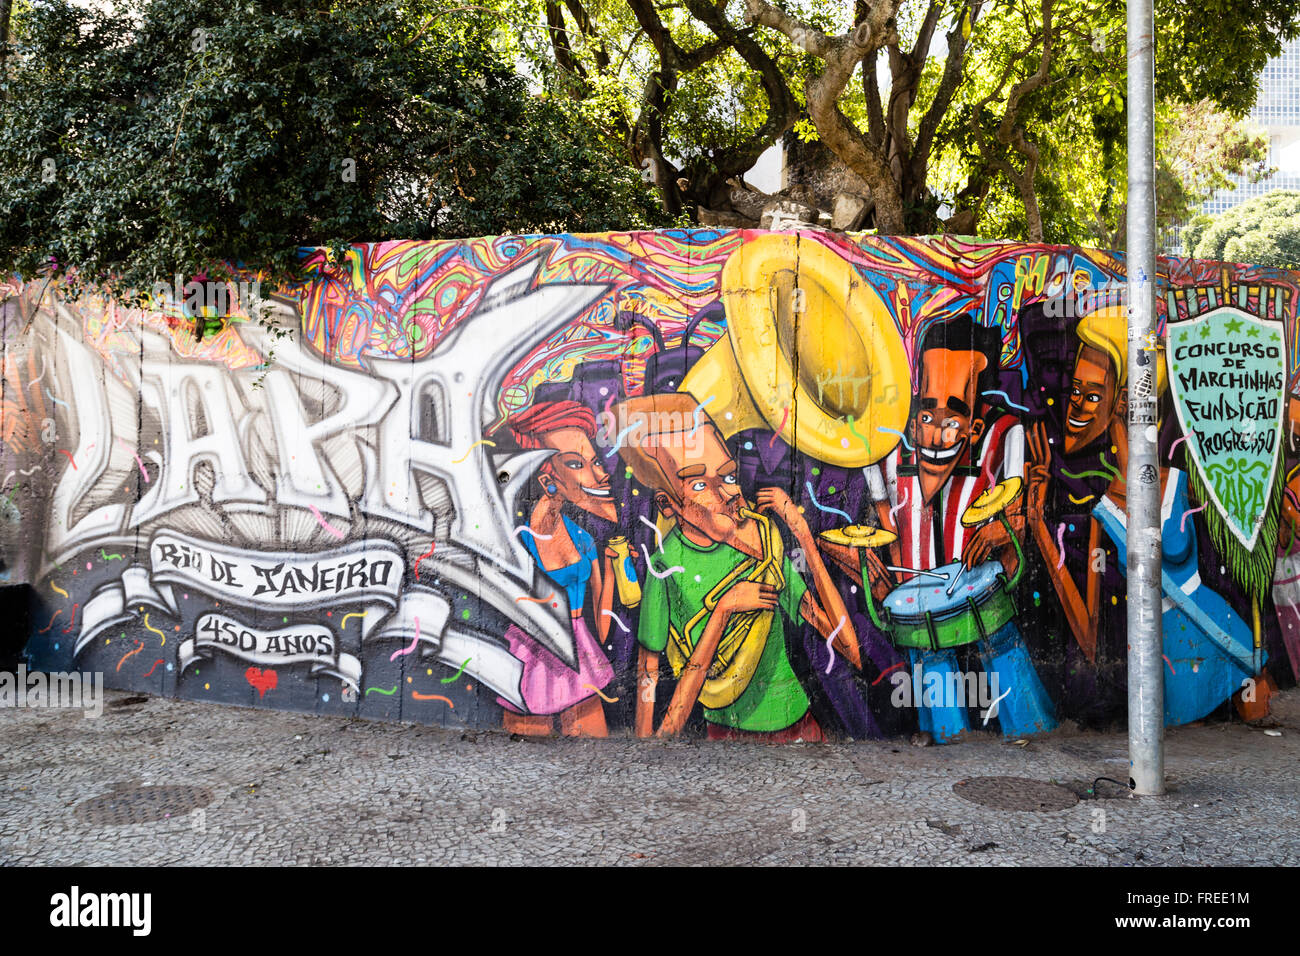 Graffiti, street art in Rio de Janeiro, Brazil Stock Photo